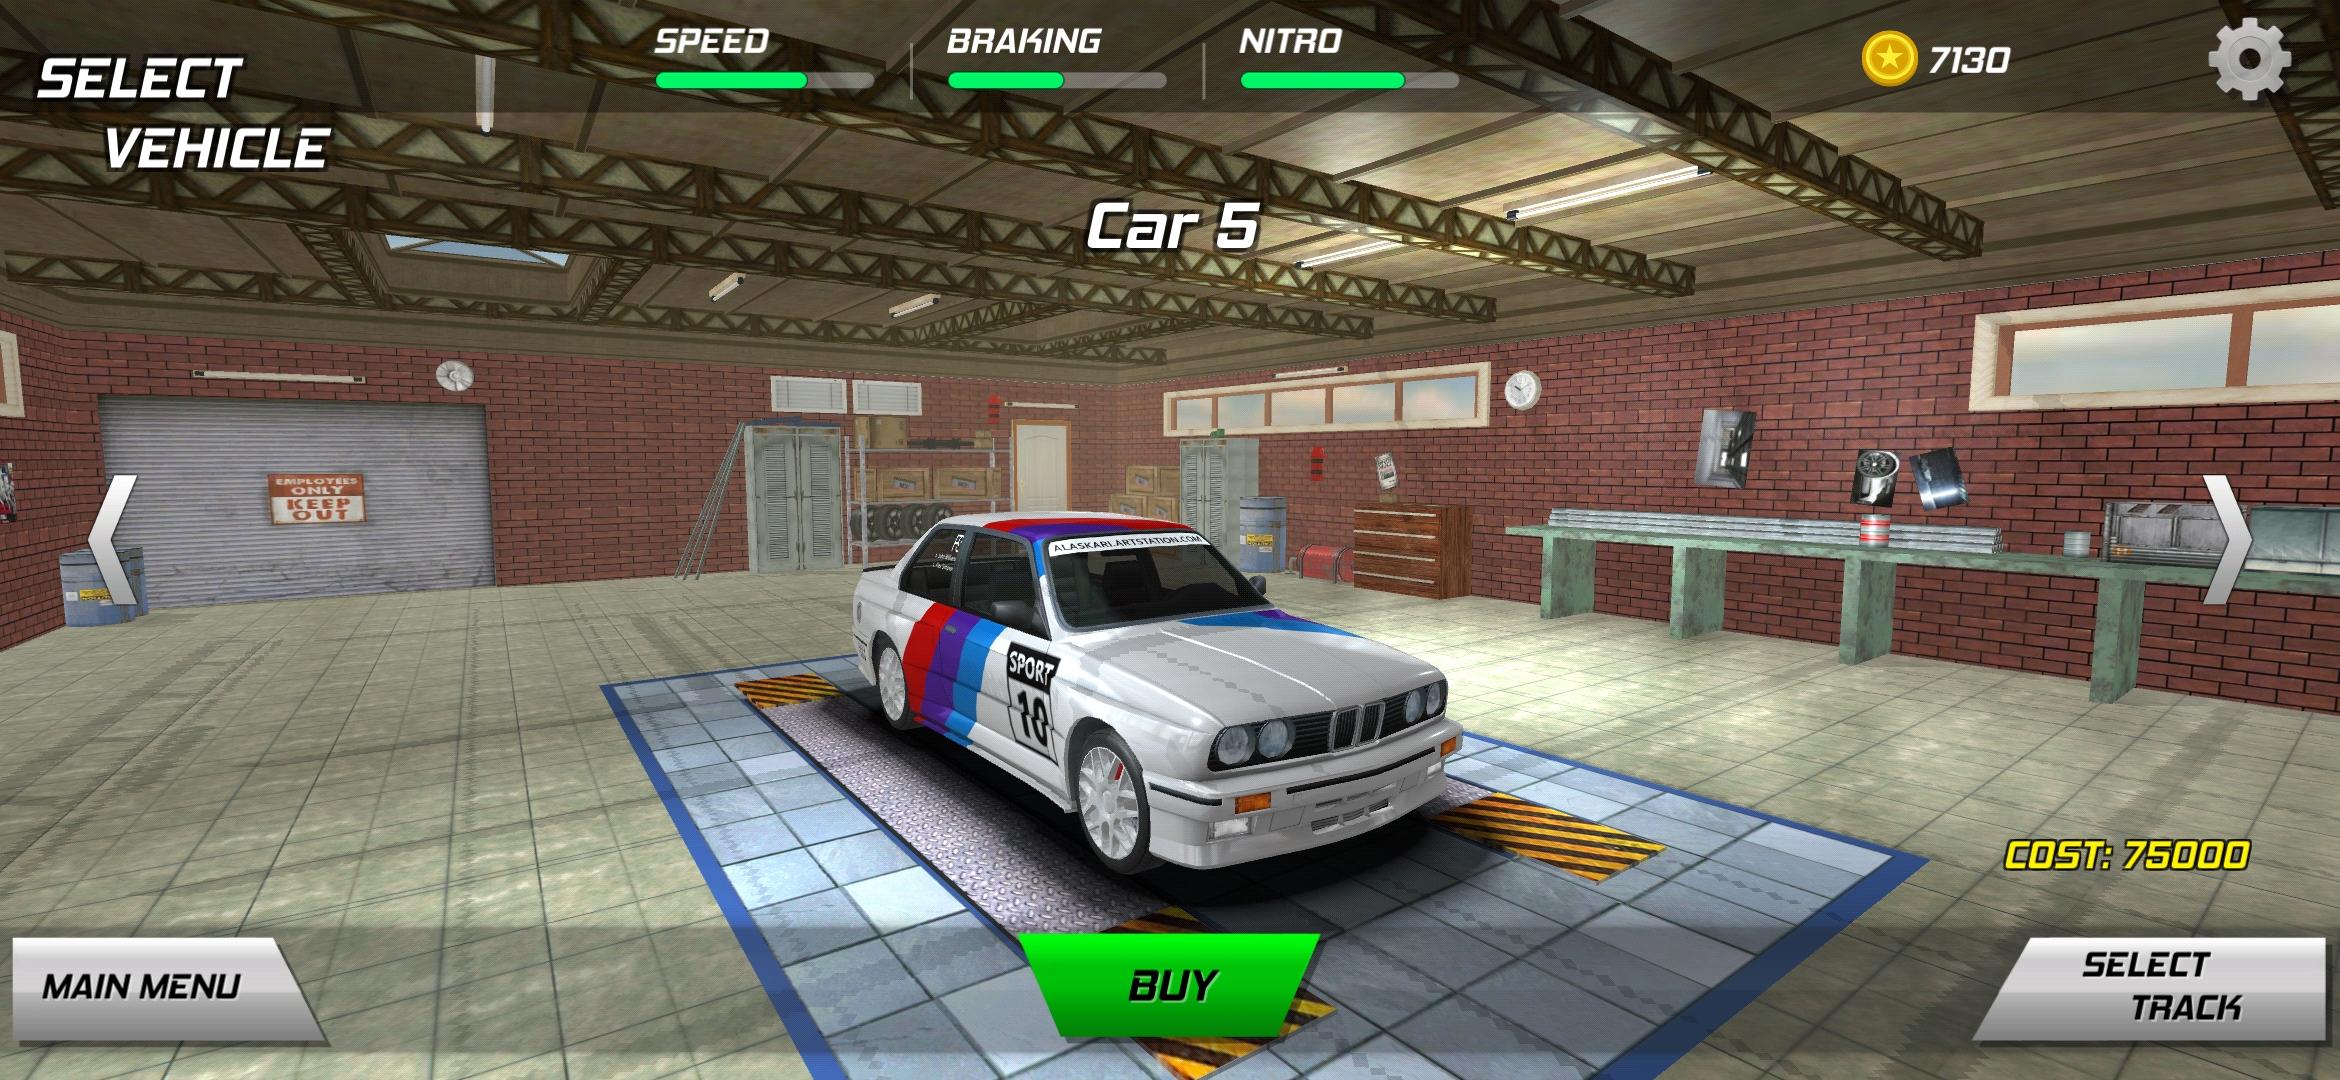 Drive Zone -  Drift and Drive 0.6.3 Screenshot 7